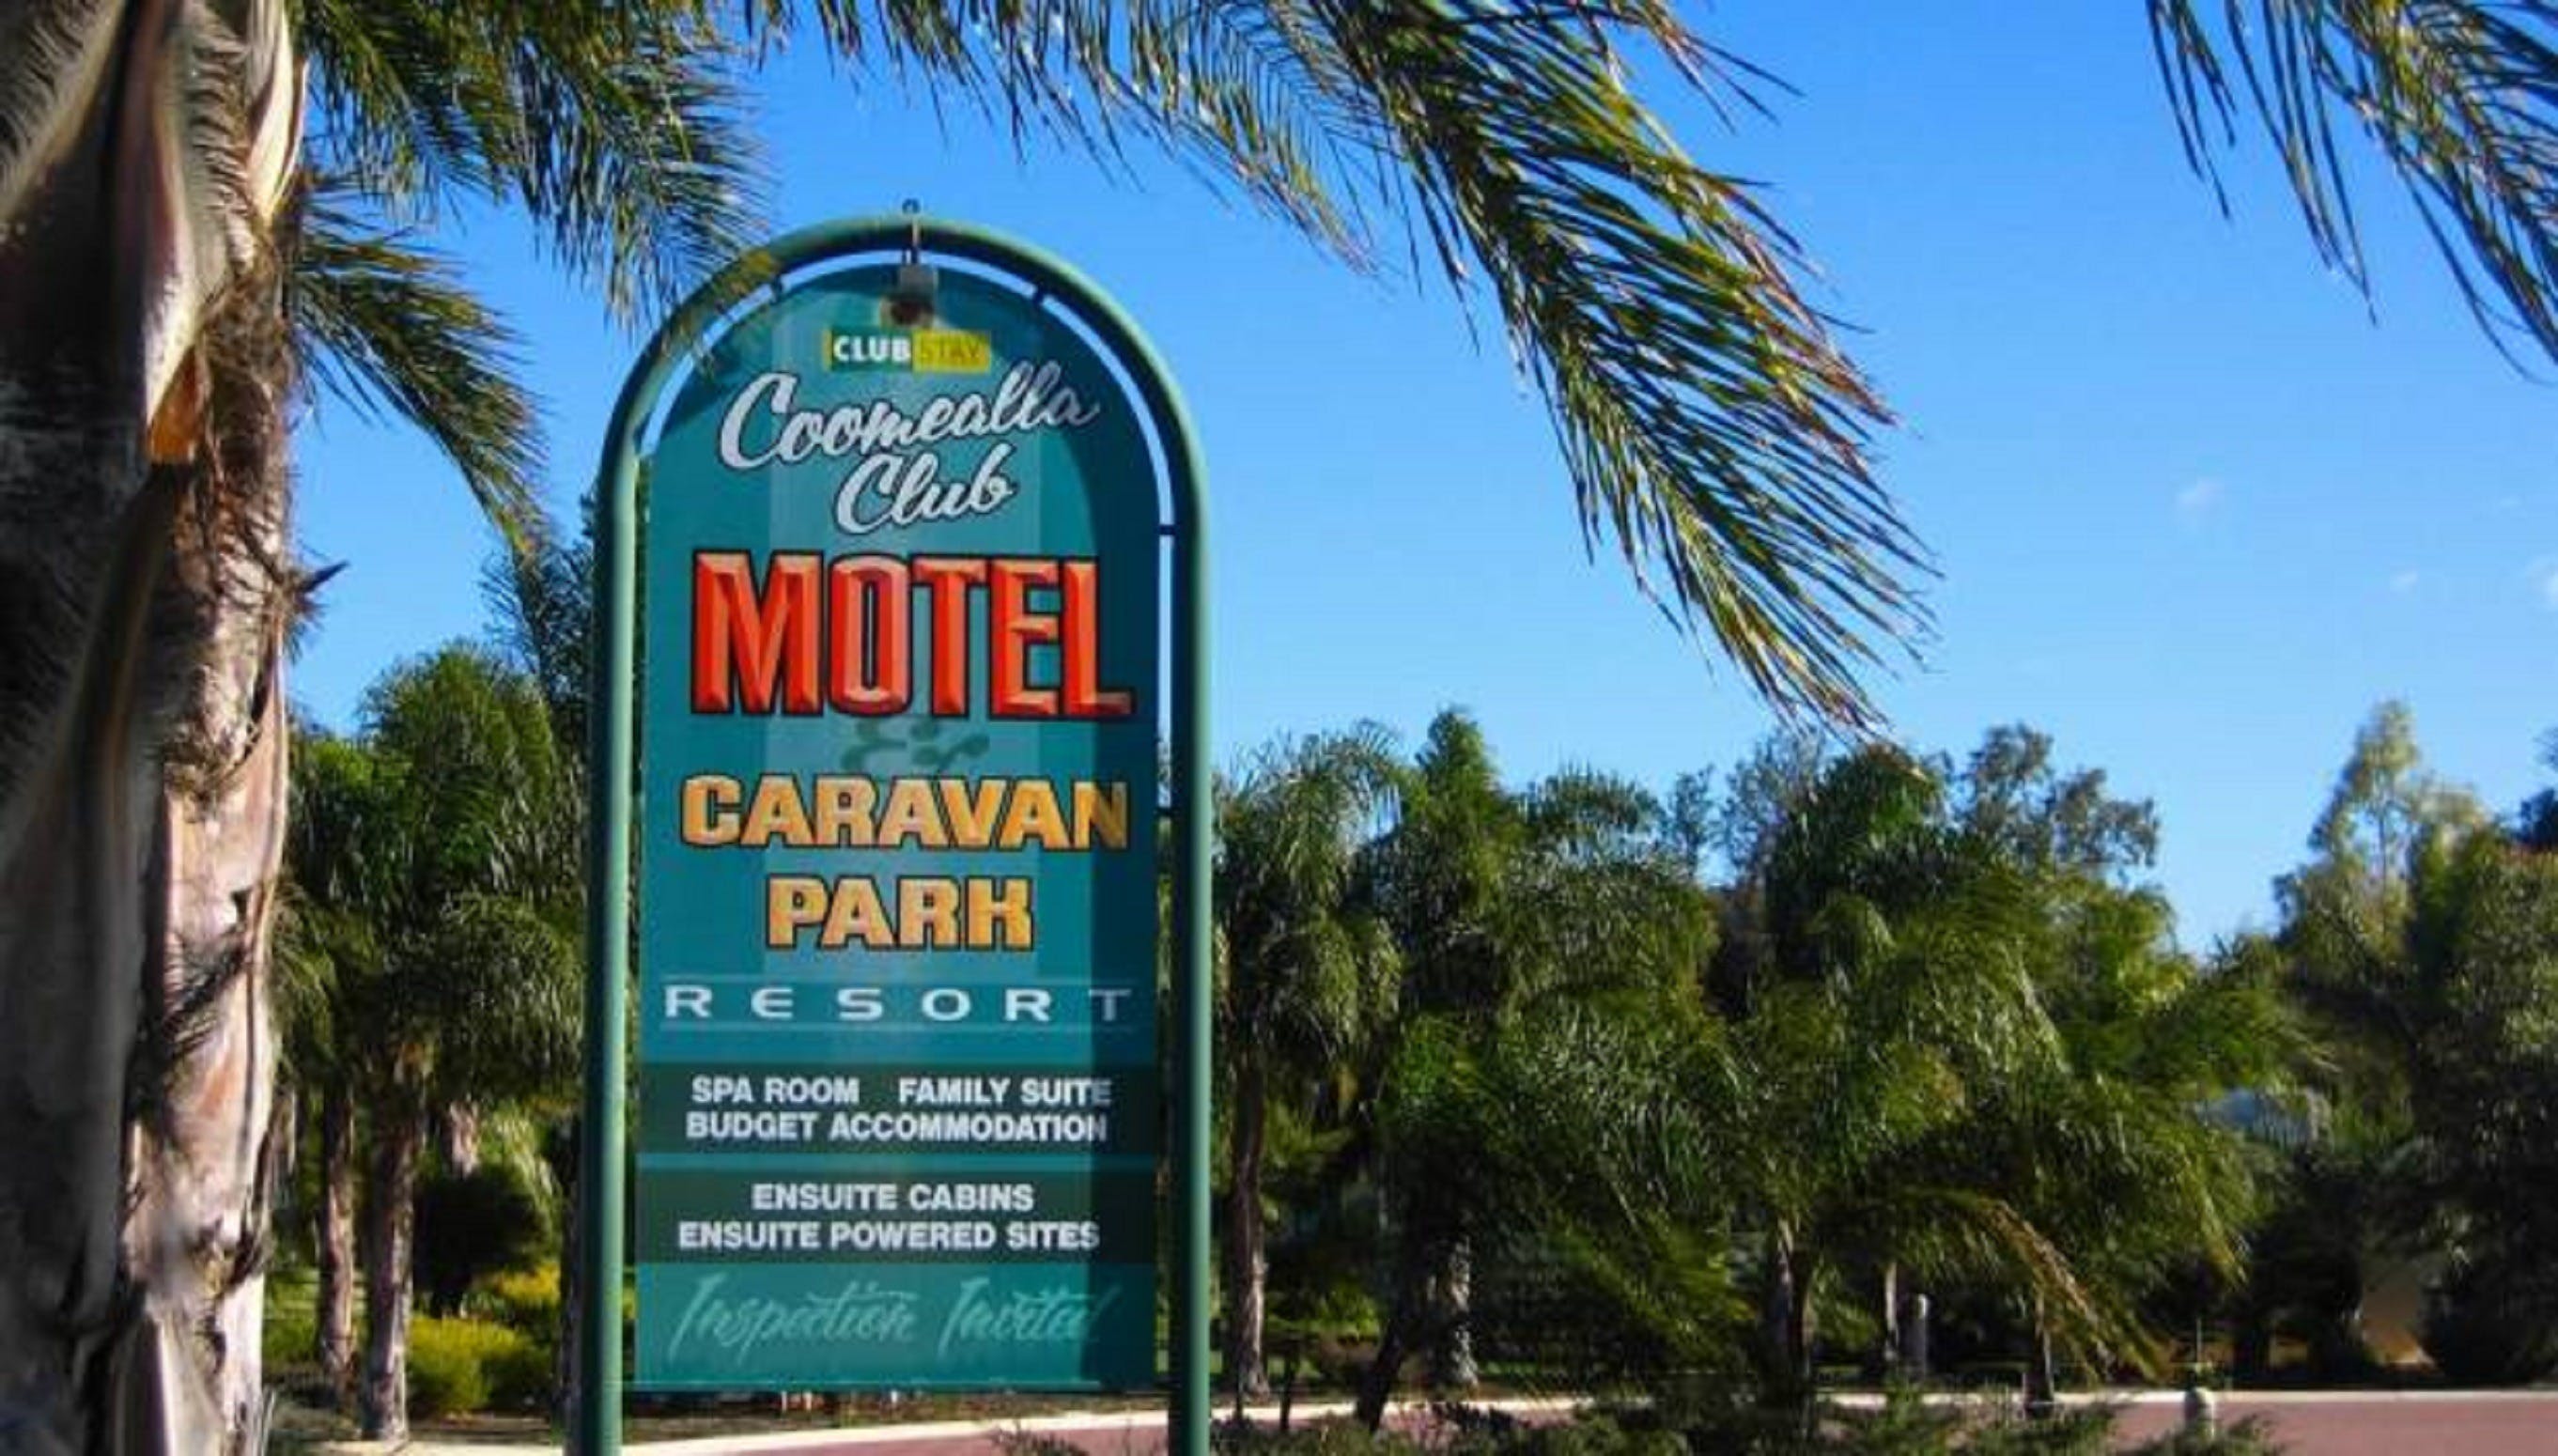 Coomealla Club Motel and Caravan Park Resort - Perisher Accommodation